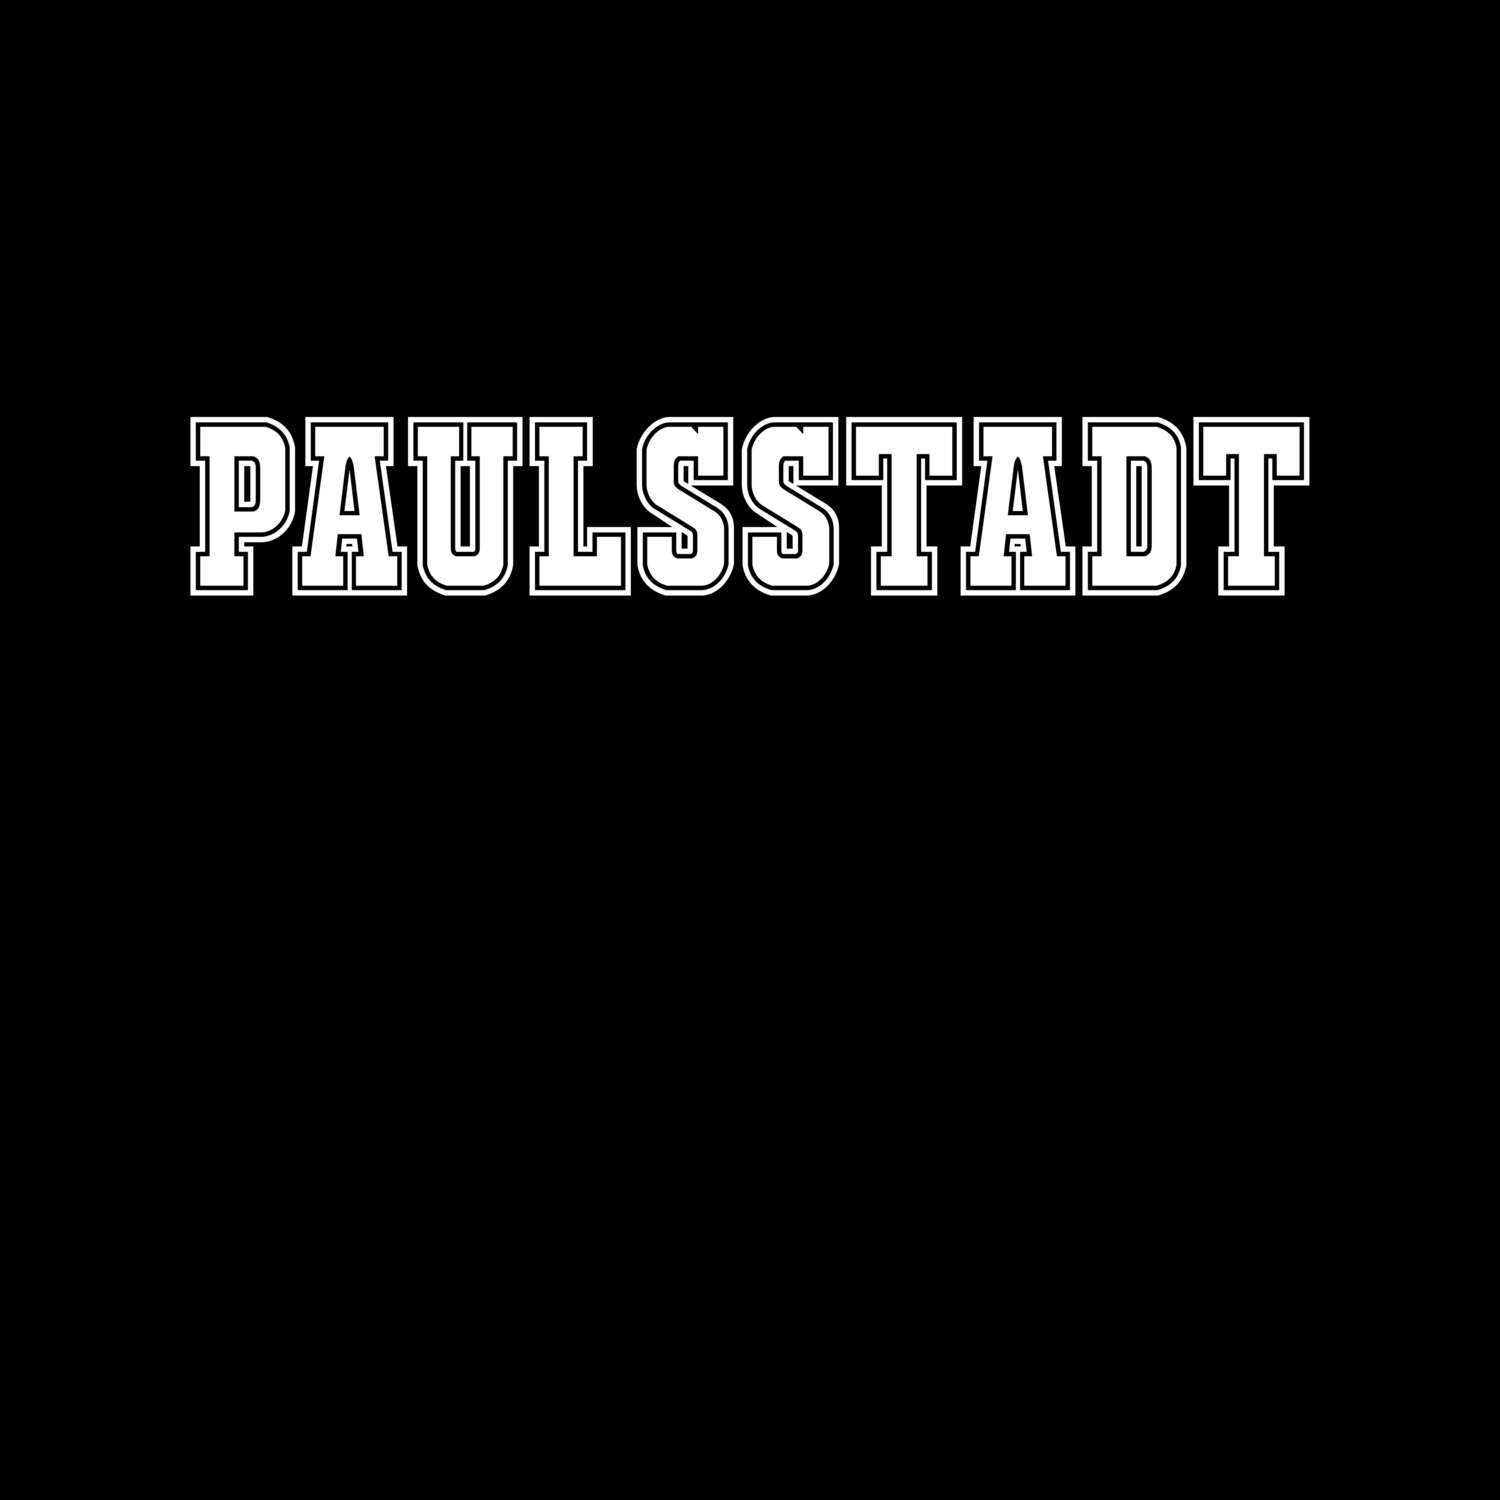 Paulsstadt T-Shirt »Classic«